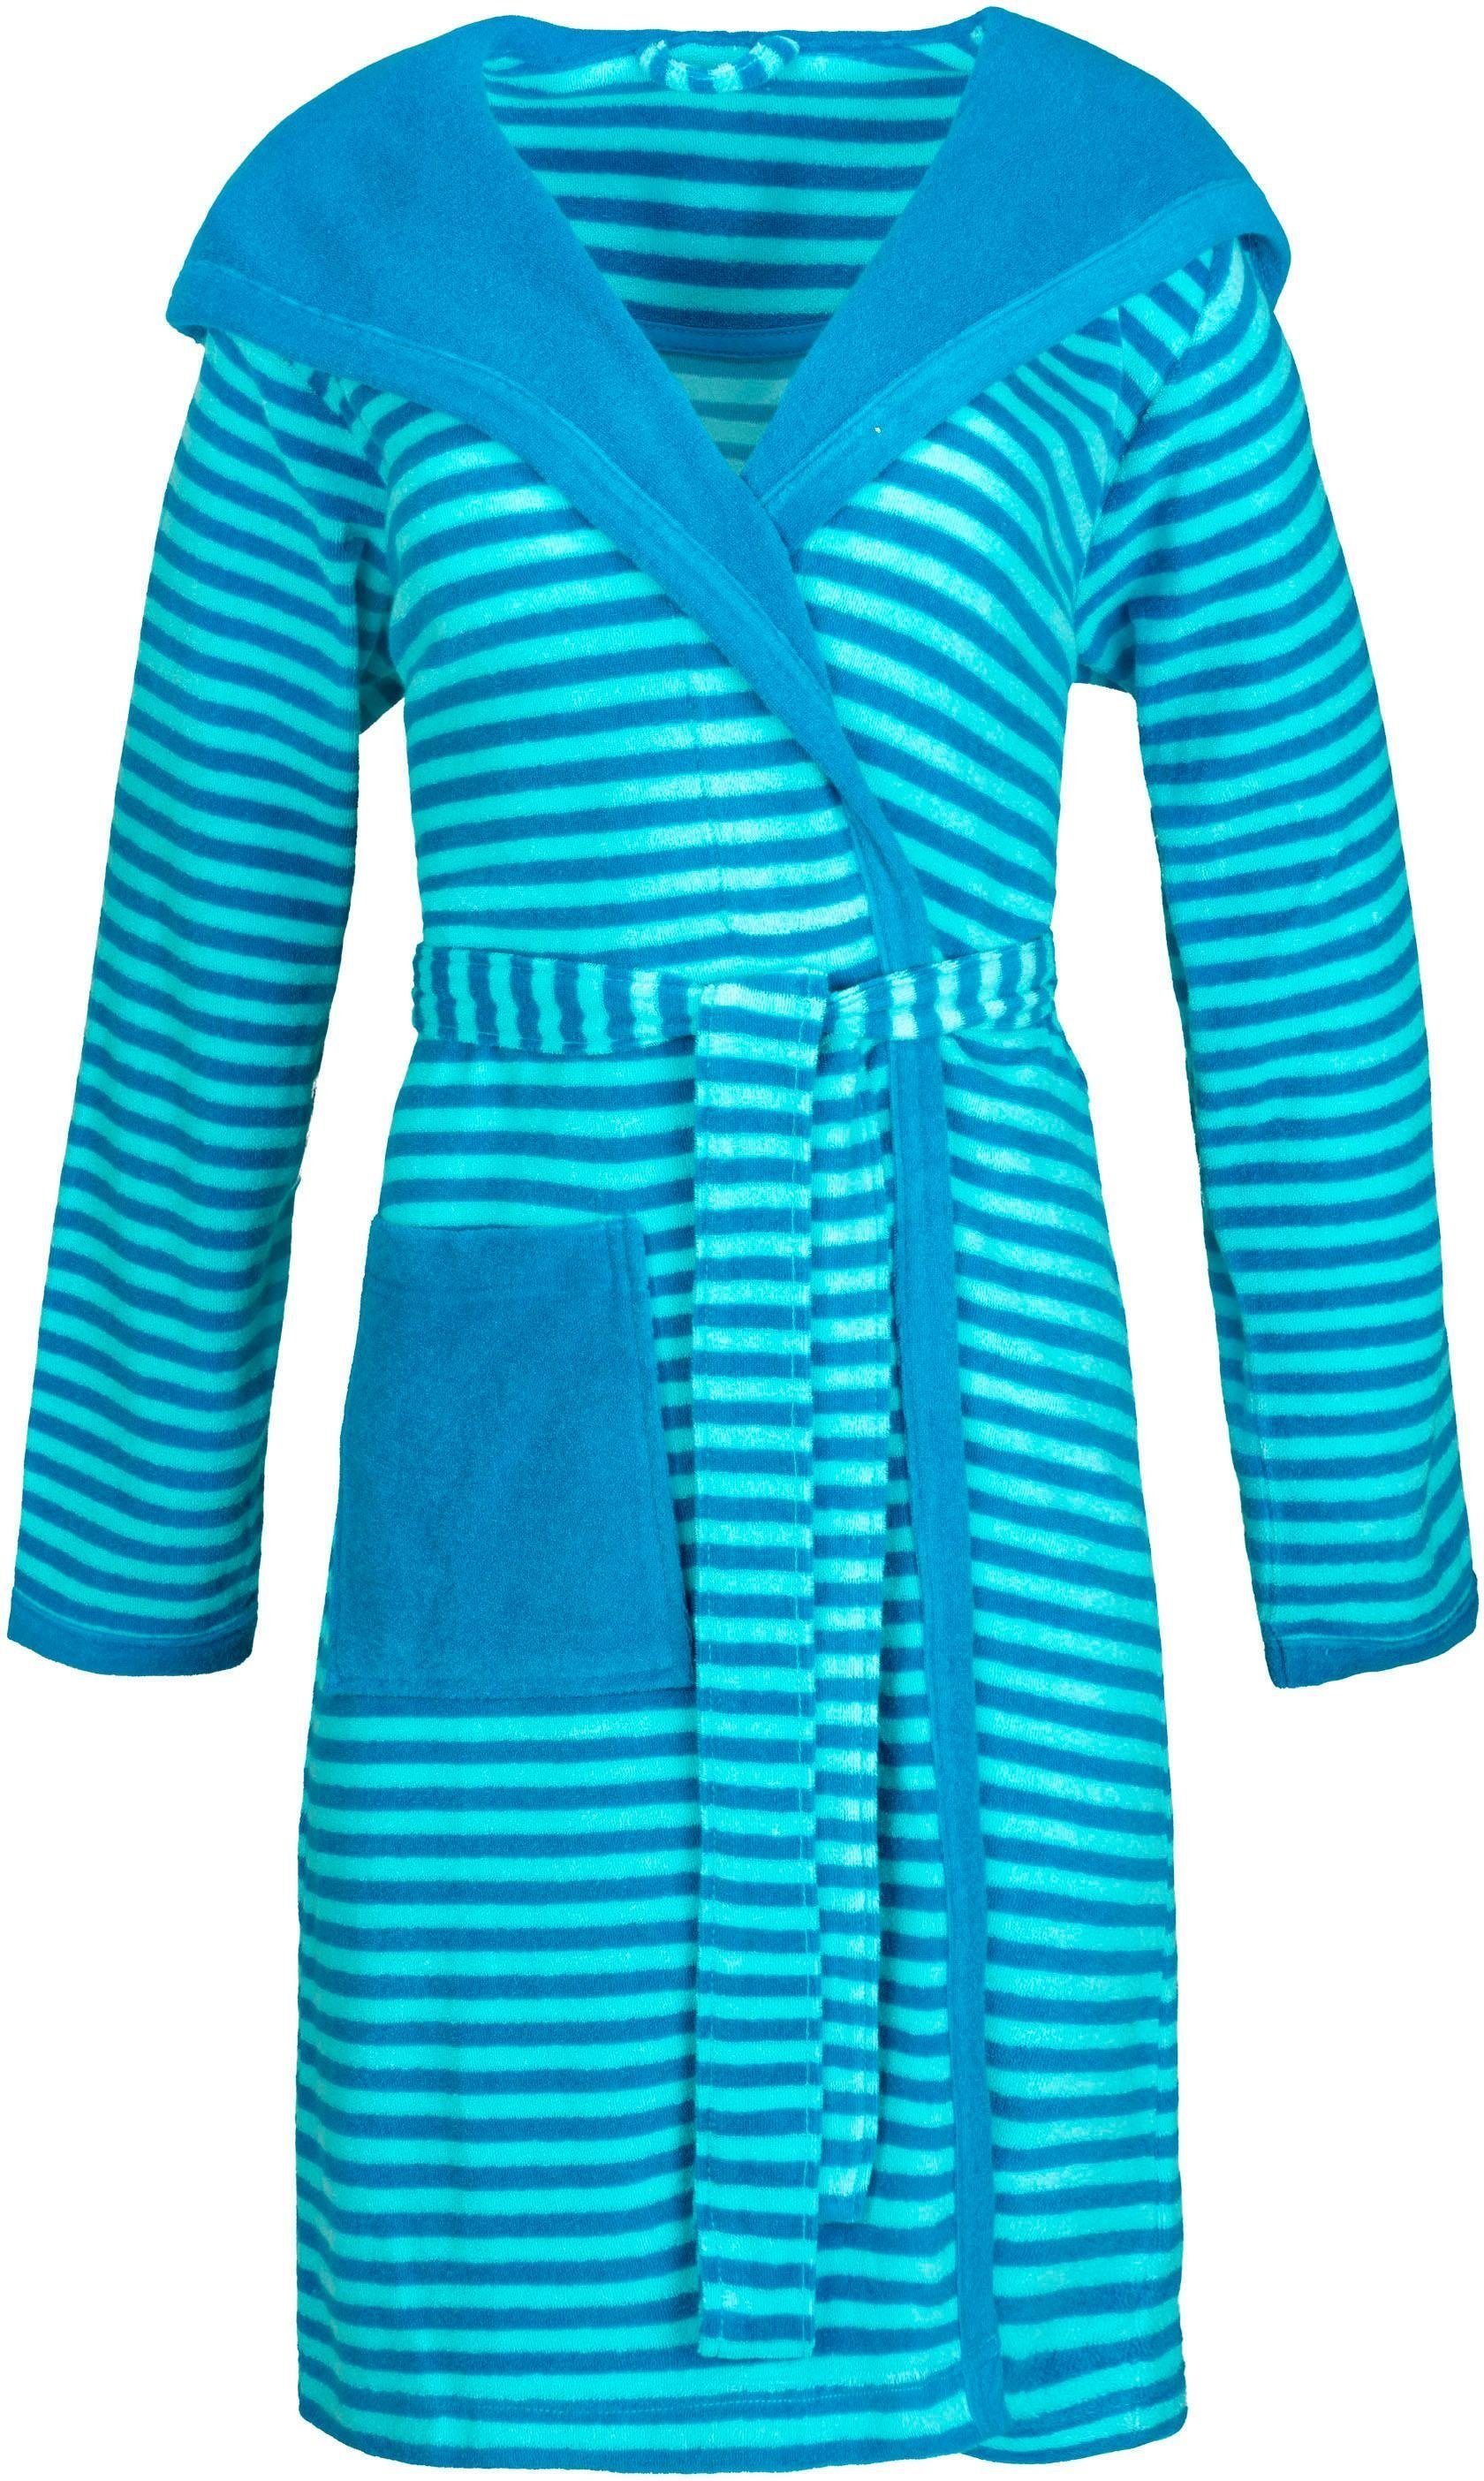 Esprit Damenbademantel Striped Hoody, Kurzform, Rundstrickware, Kapuze, Gürtel, mit Kapuze, gestreift turquoise